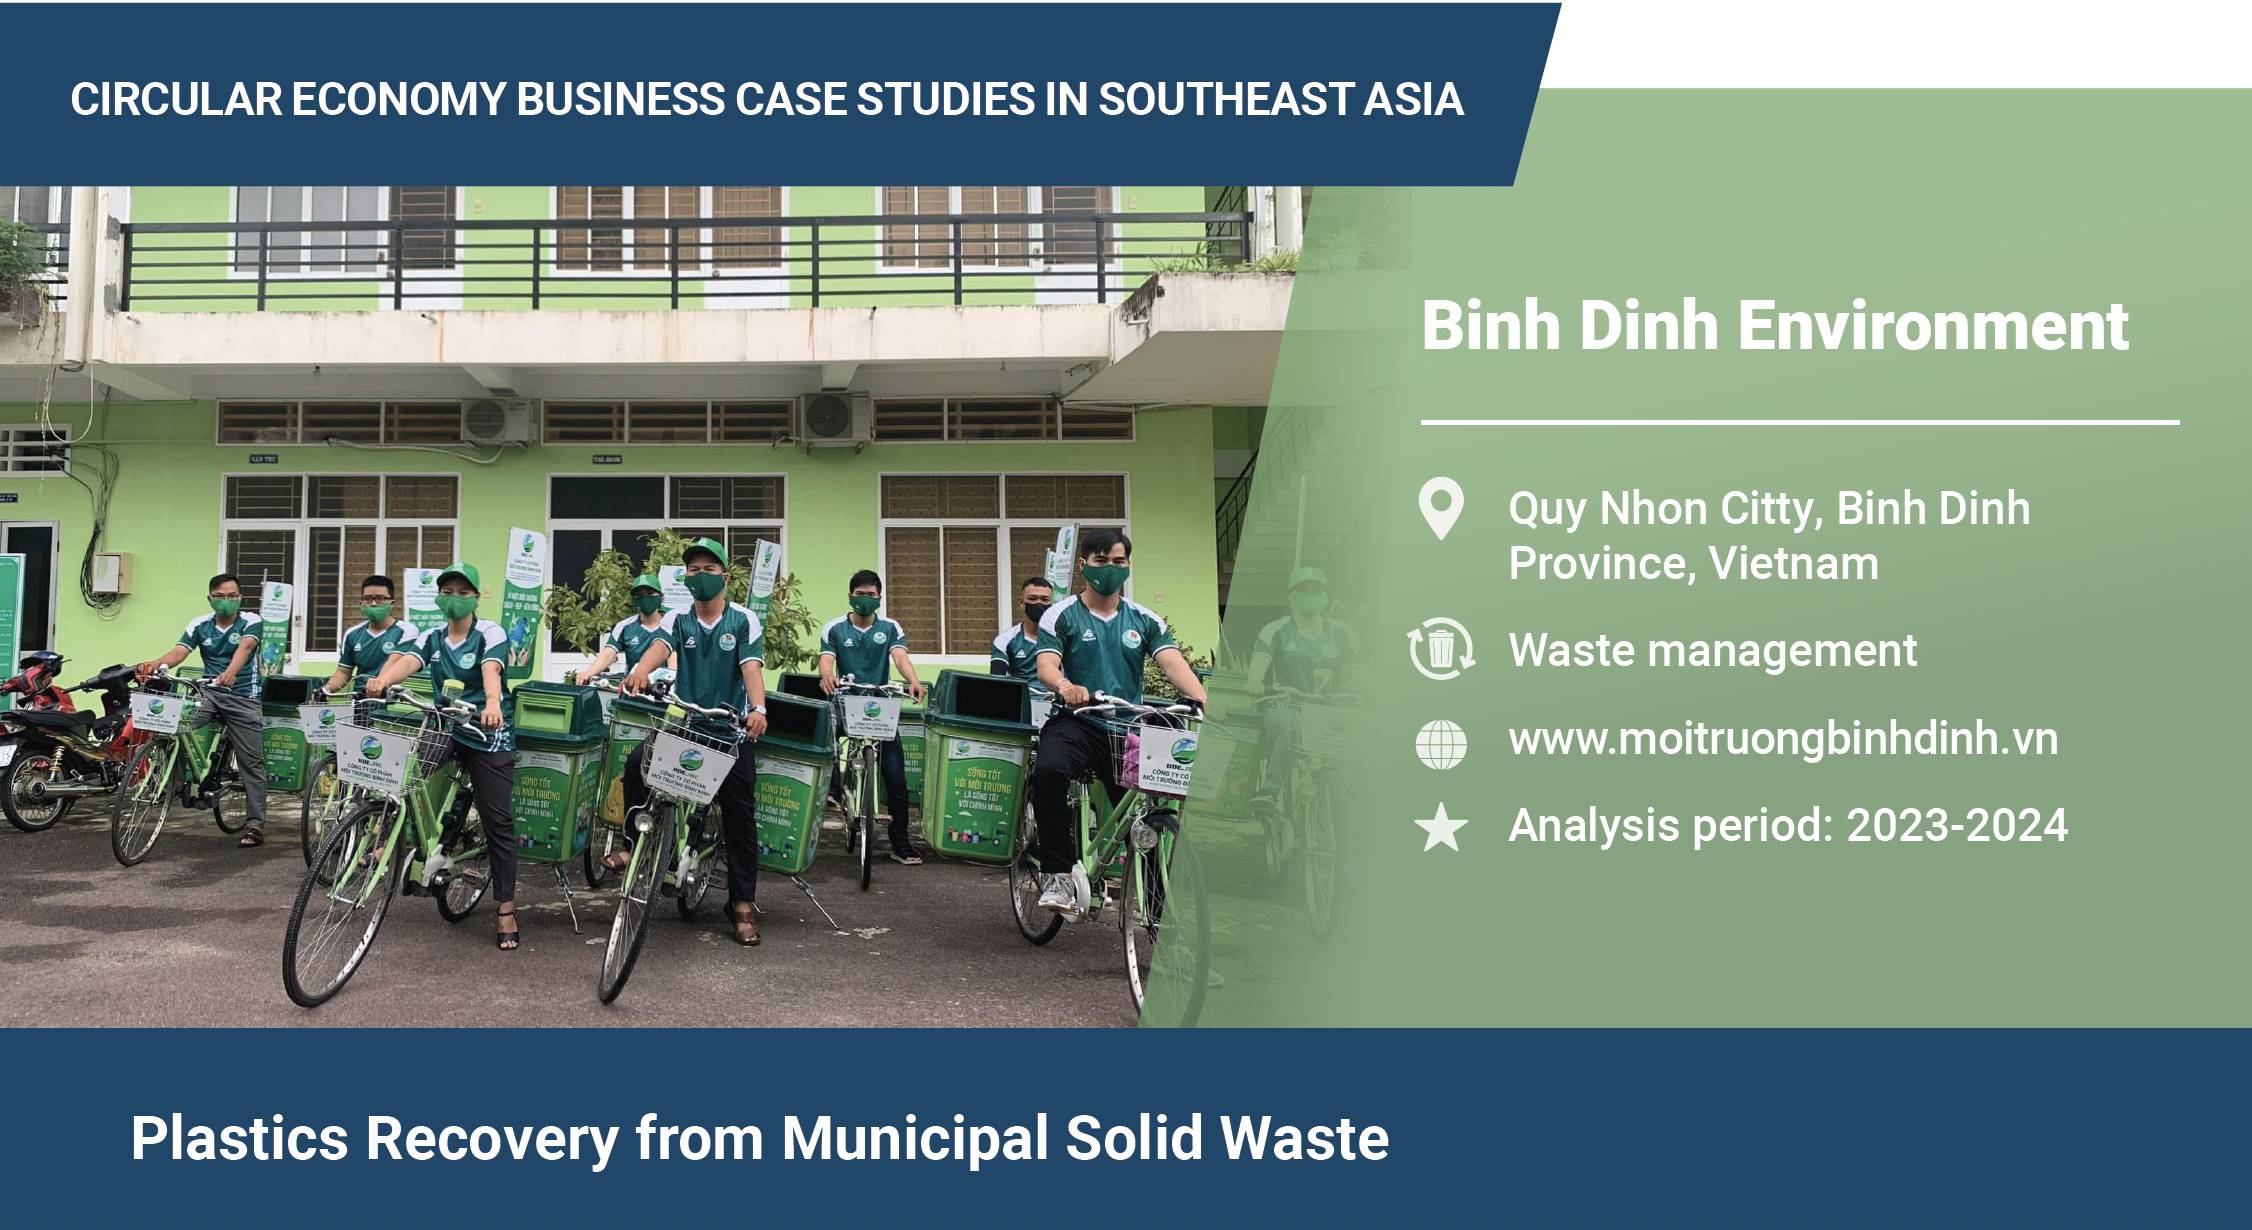 Binh Dinh Environment4140